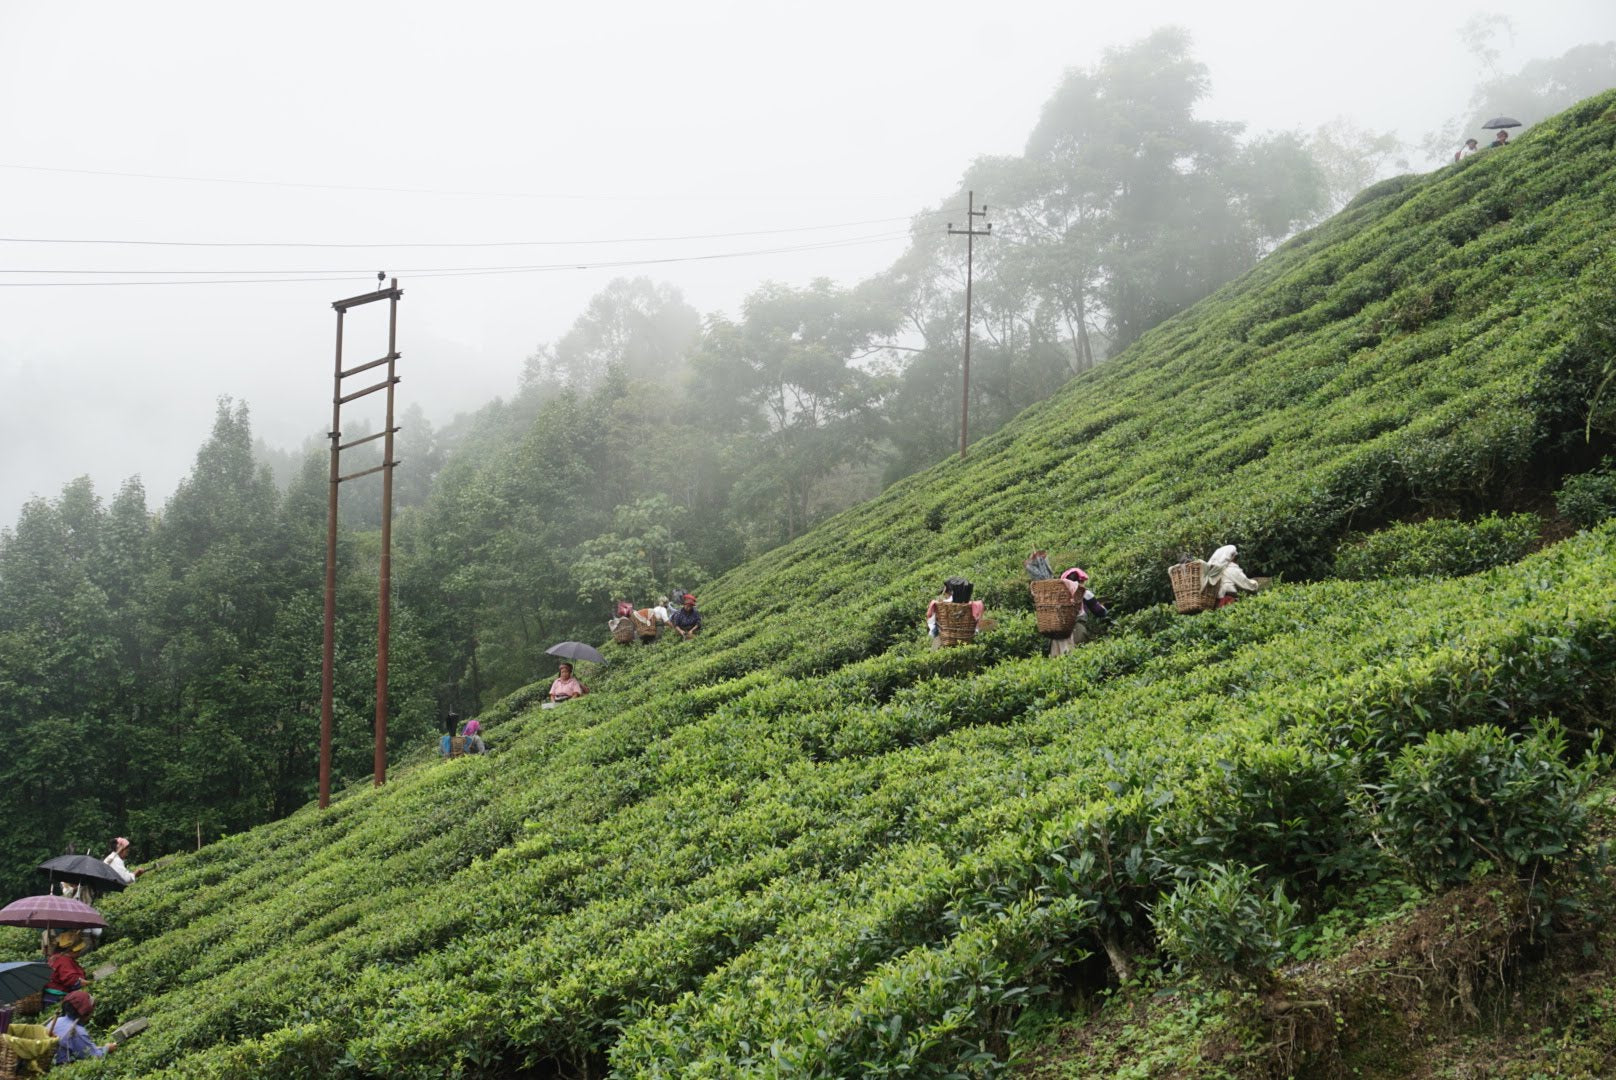 Tea pluckers at Puttabong Tea Estate, Darjeeling. Summer 2019